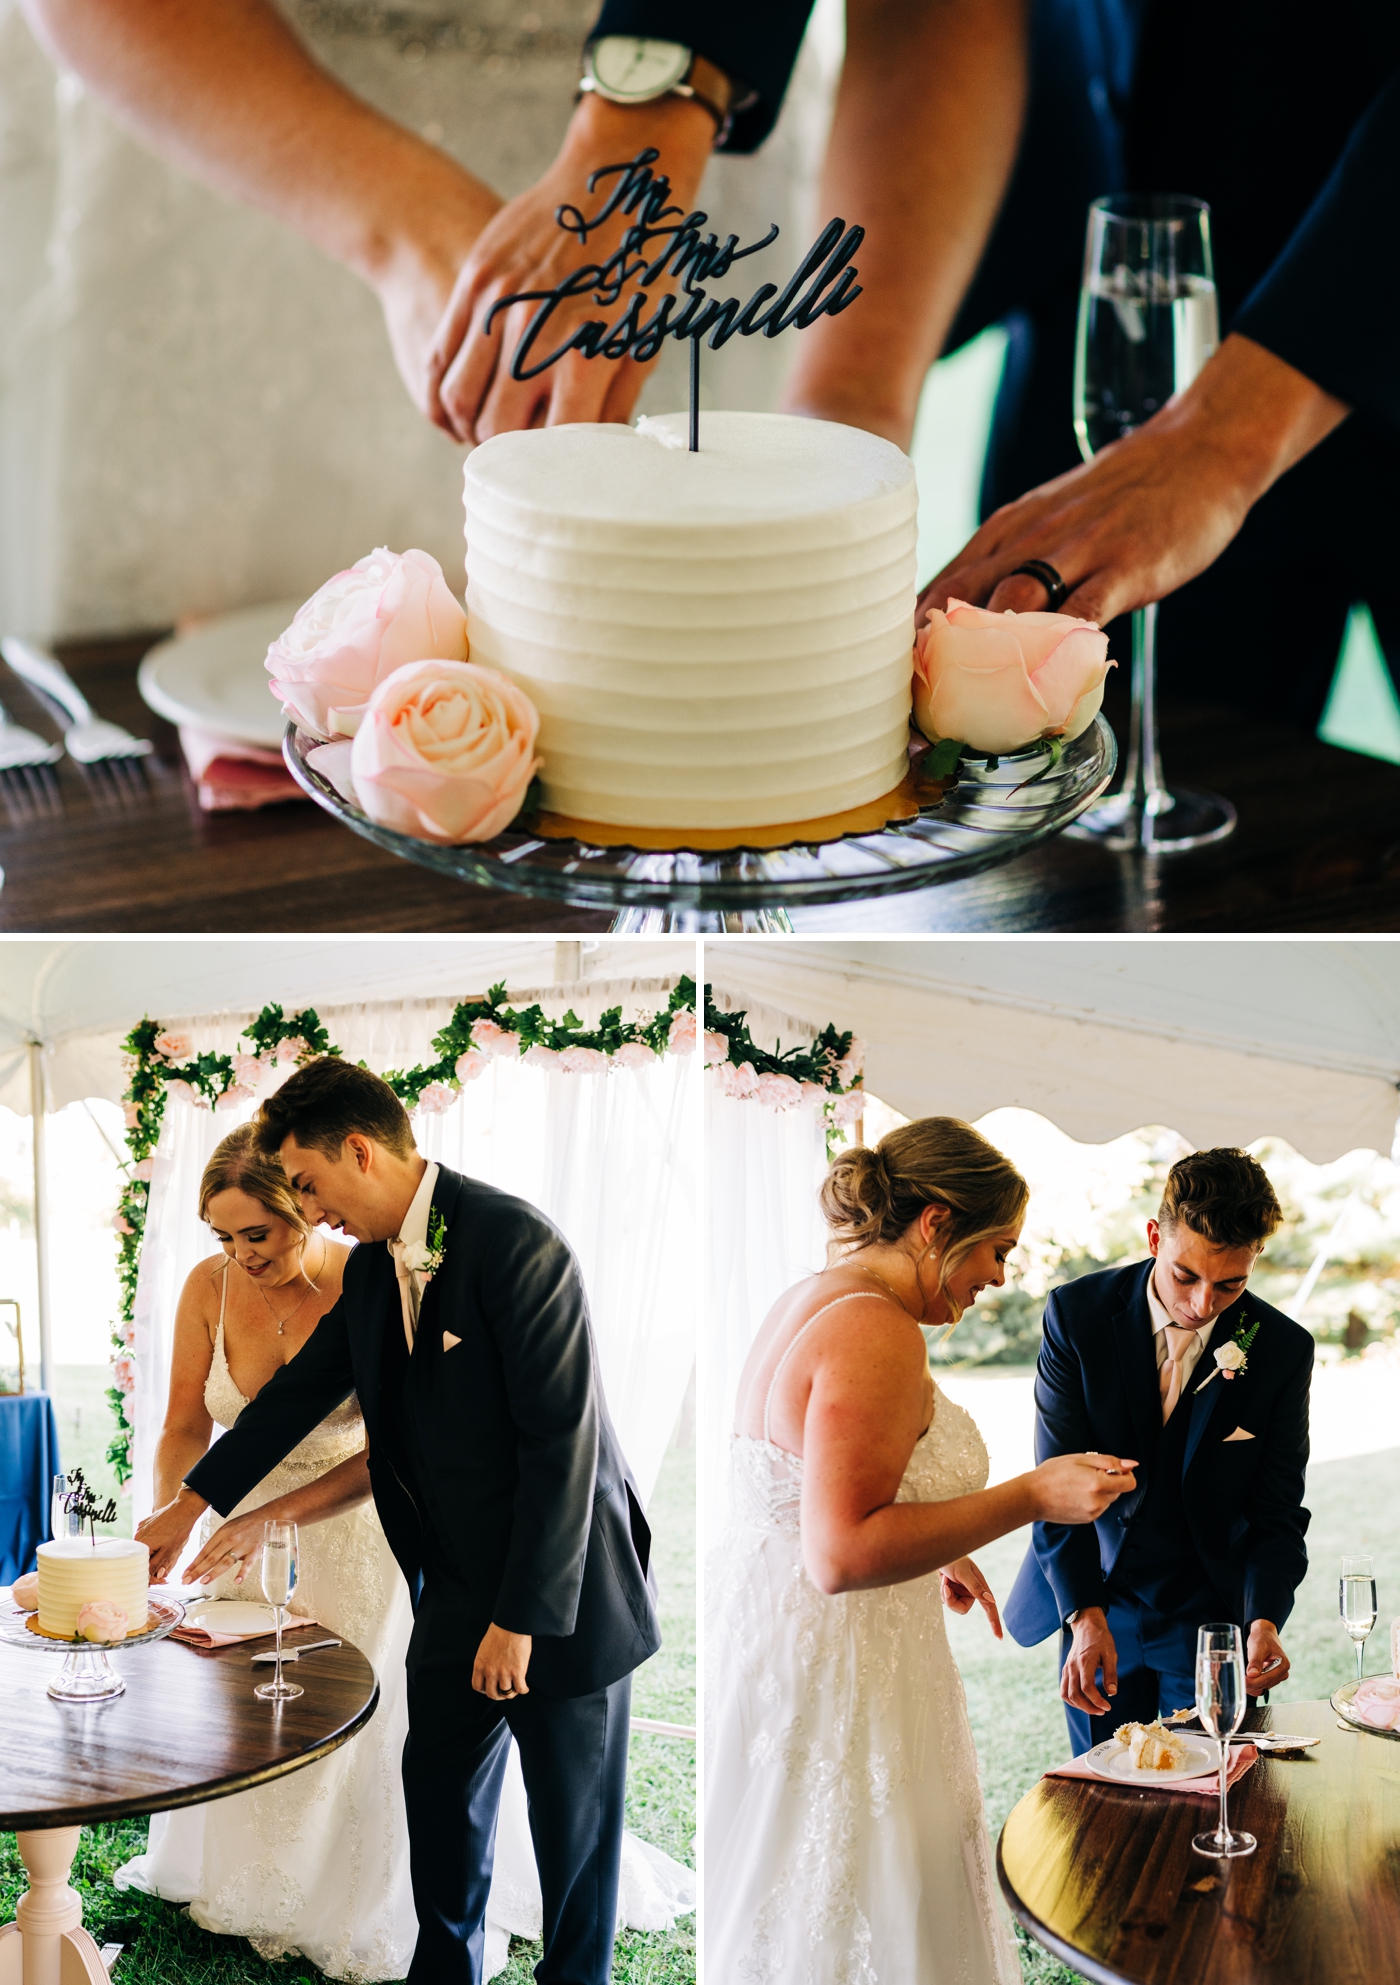 Bride and groom cutting cake during backyard wedding reception 